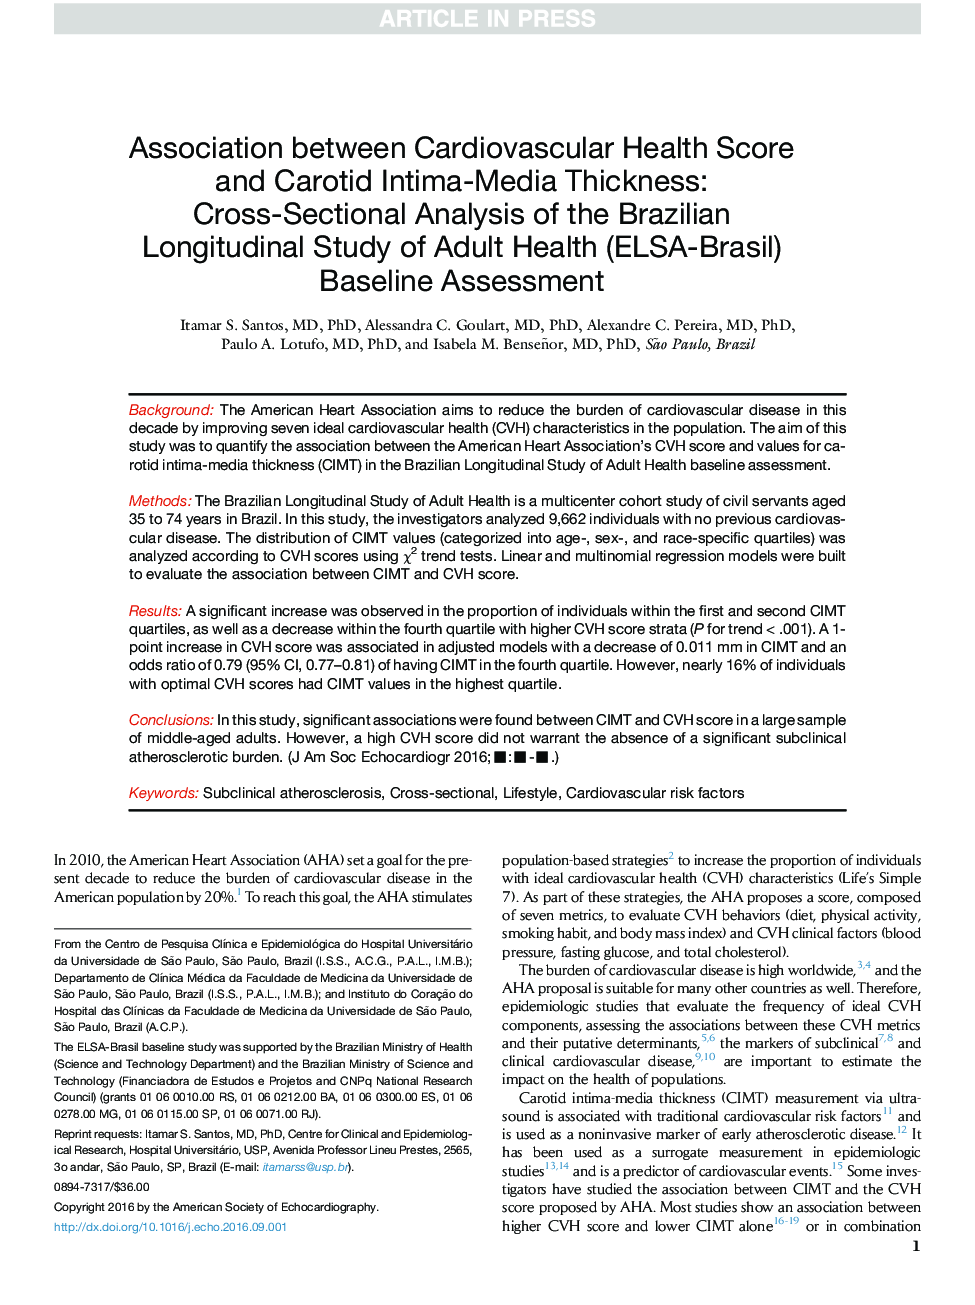 Association between Cardiovascular Health Score and Carotid Intima-Media Thickness: Cross-Sectional Analysis of the Brazilian Longitudinal Study of Adult Health (ELSA-Brasil) Baseline Assessment